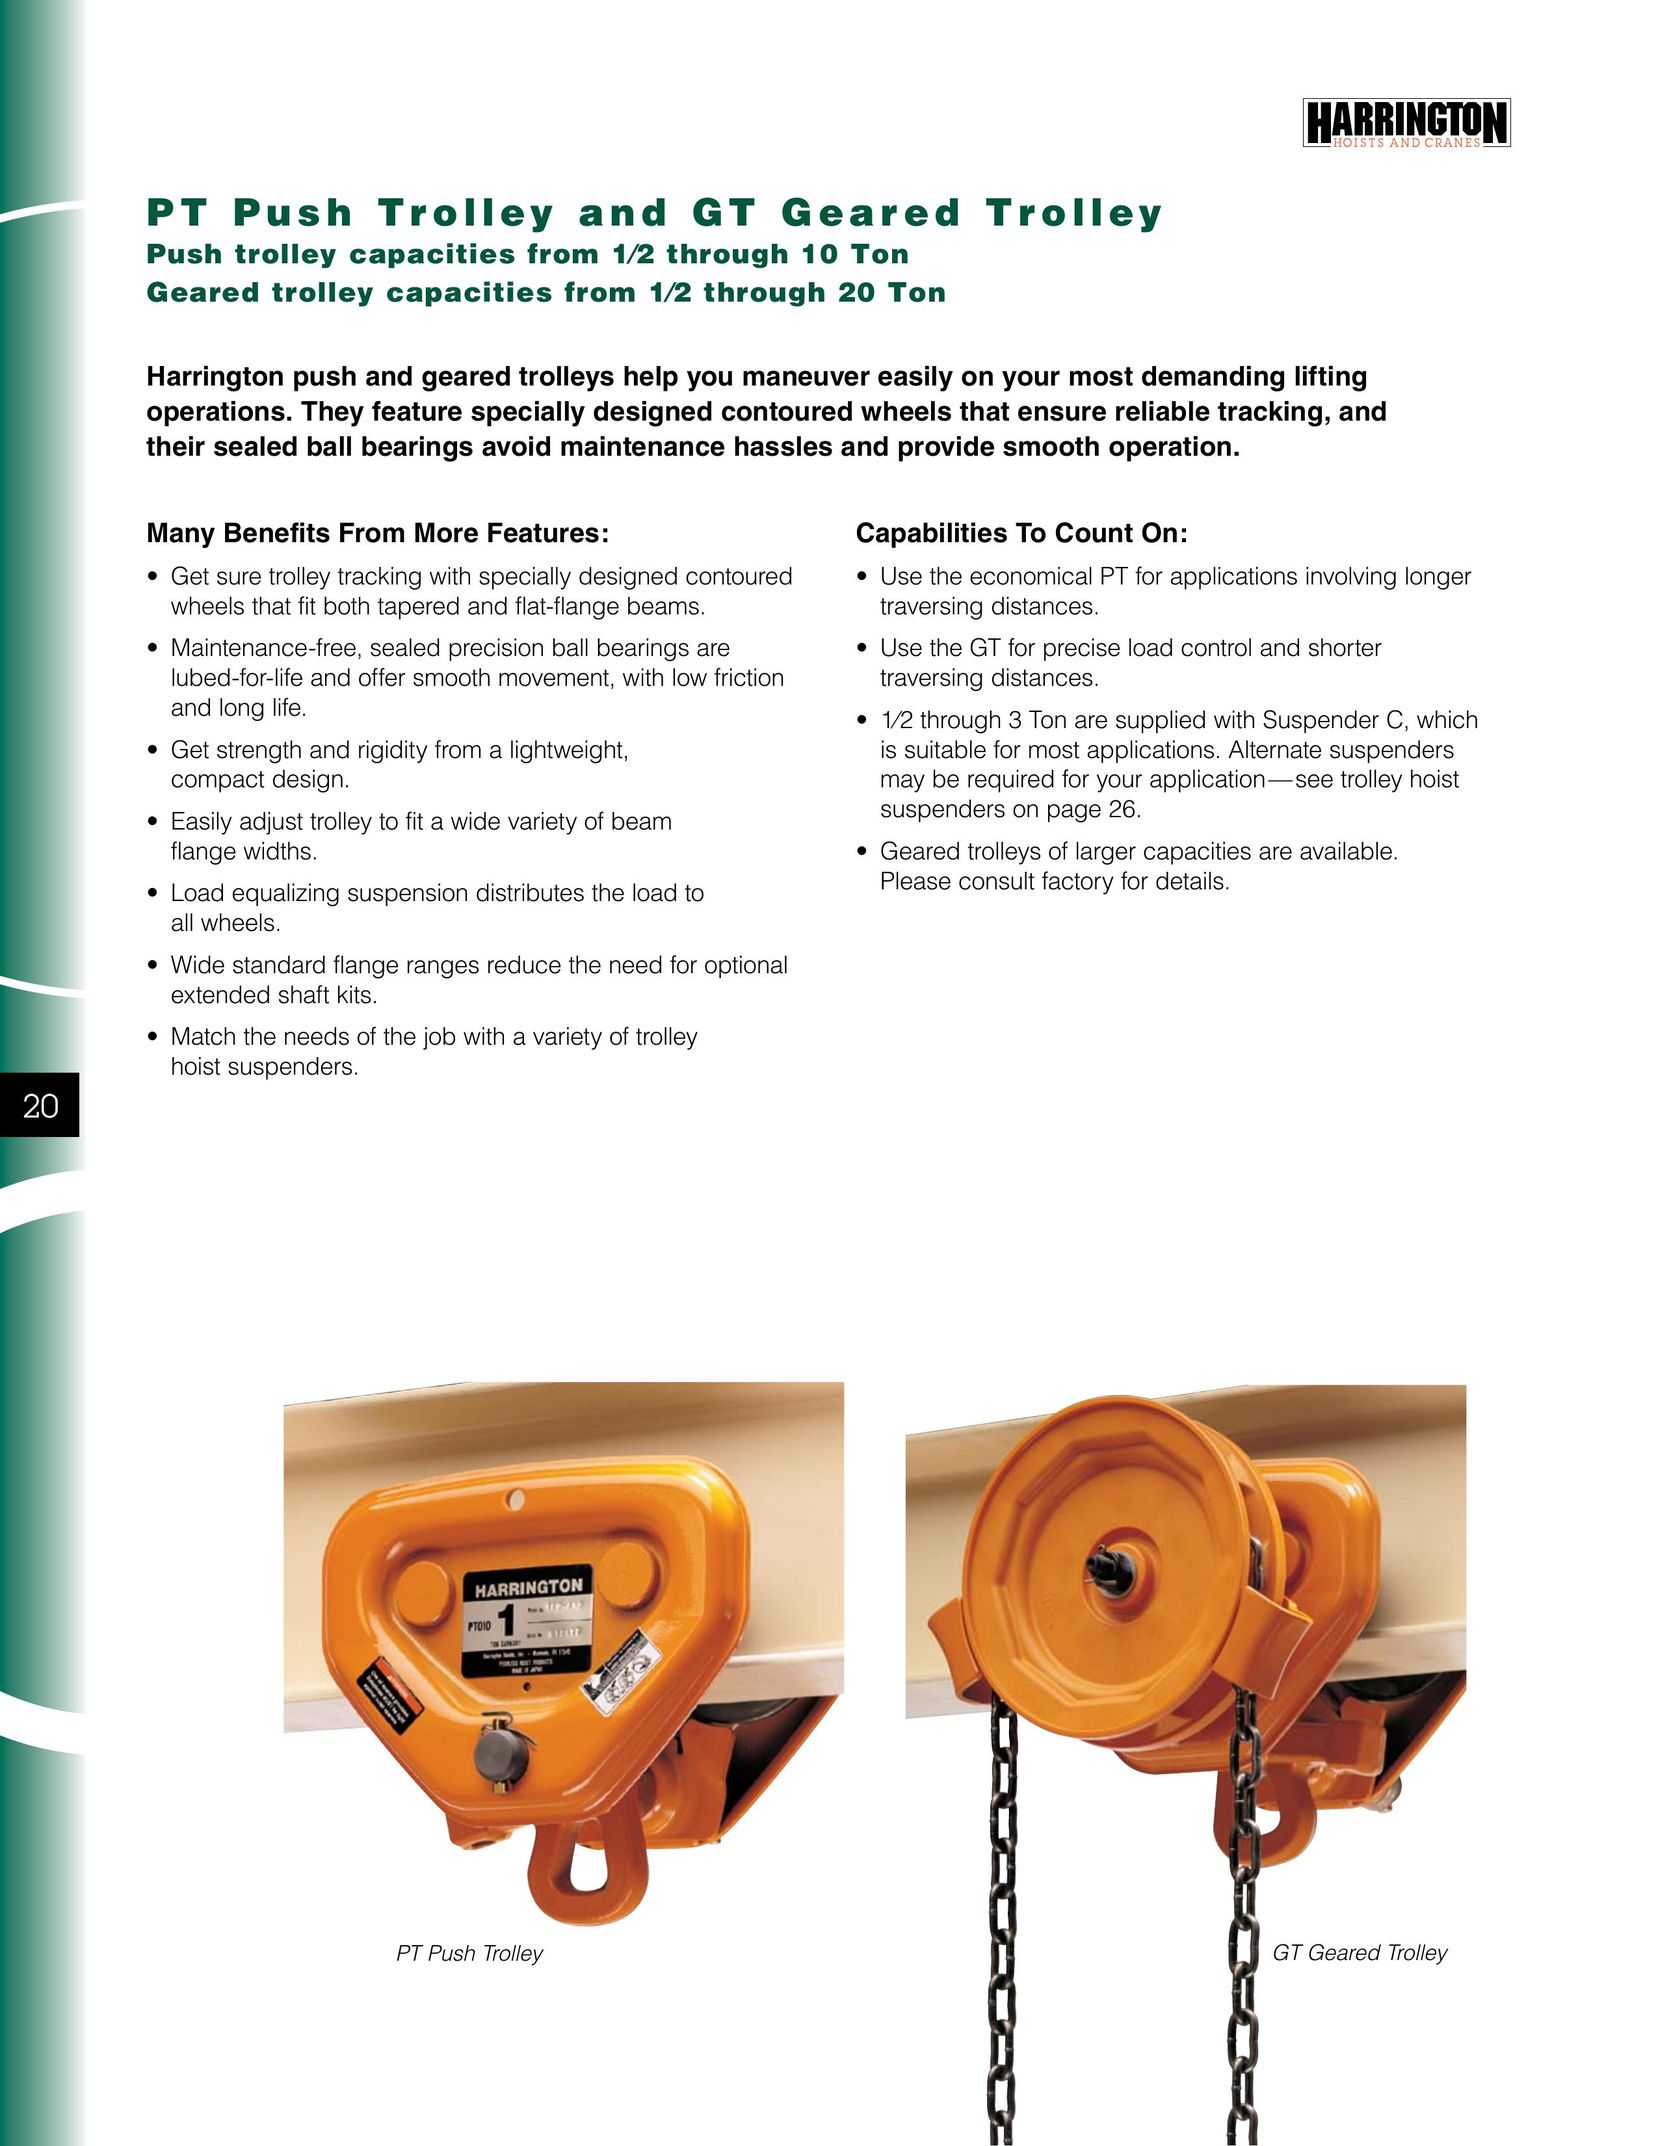 Harrington Hoists PT Push Trolley Fitness Equipment User Manual (Page 1)